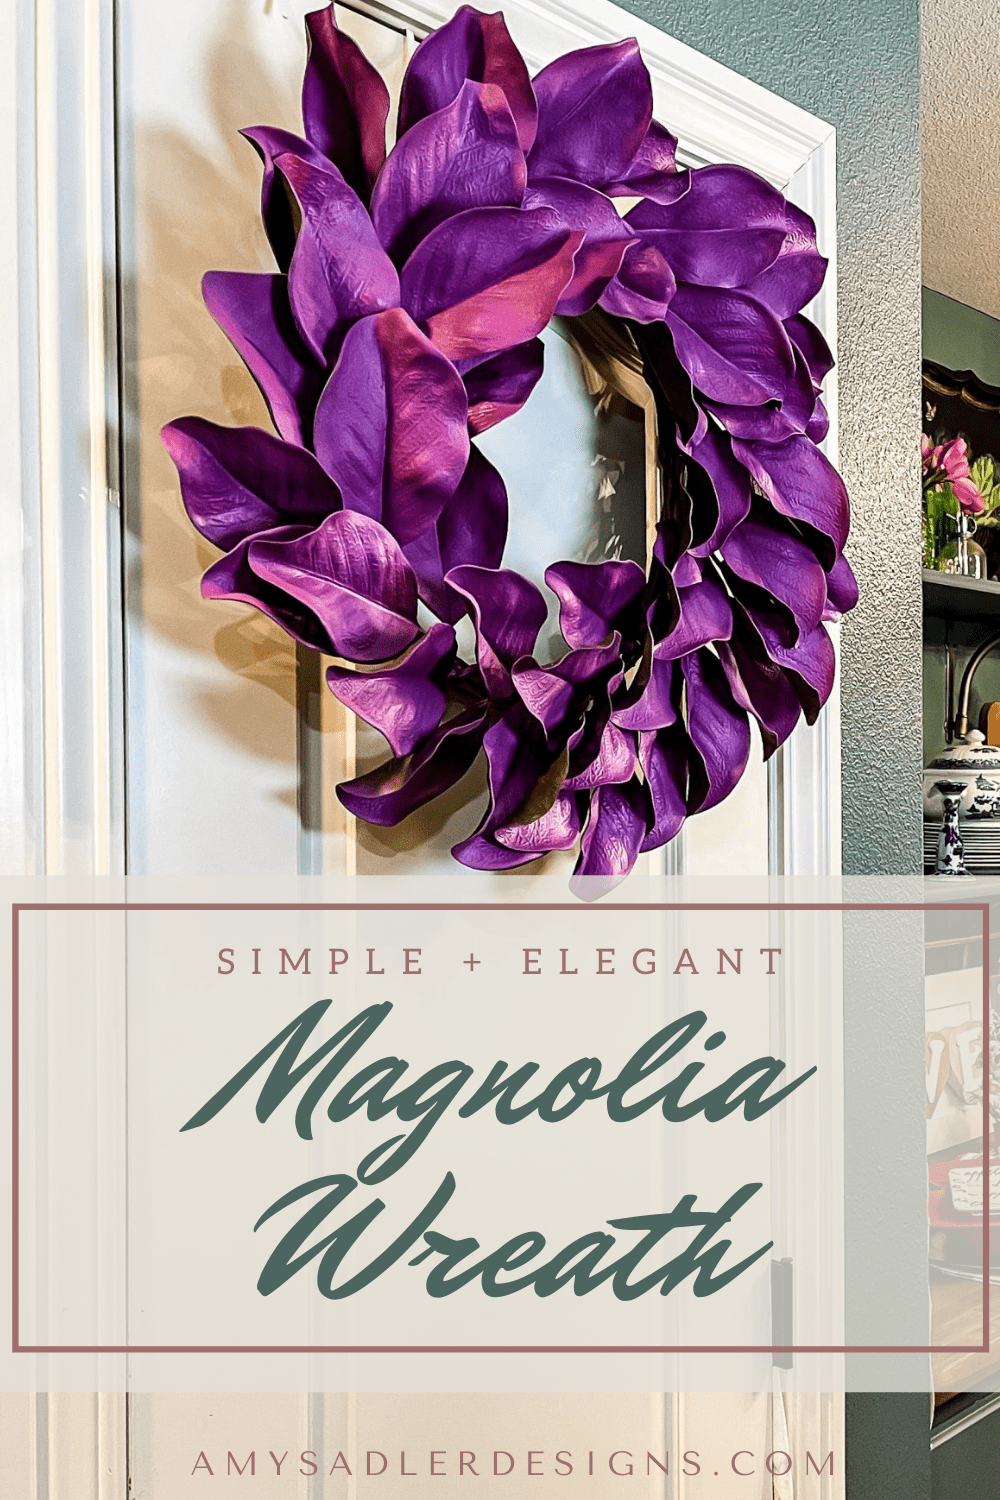 Magnolia Wreath (With a twist)